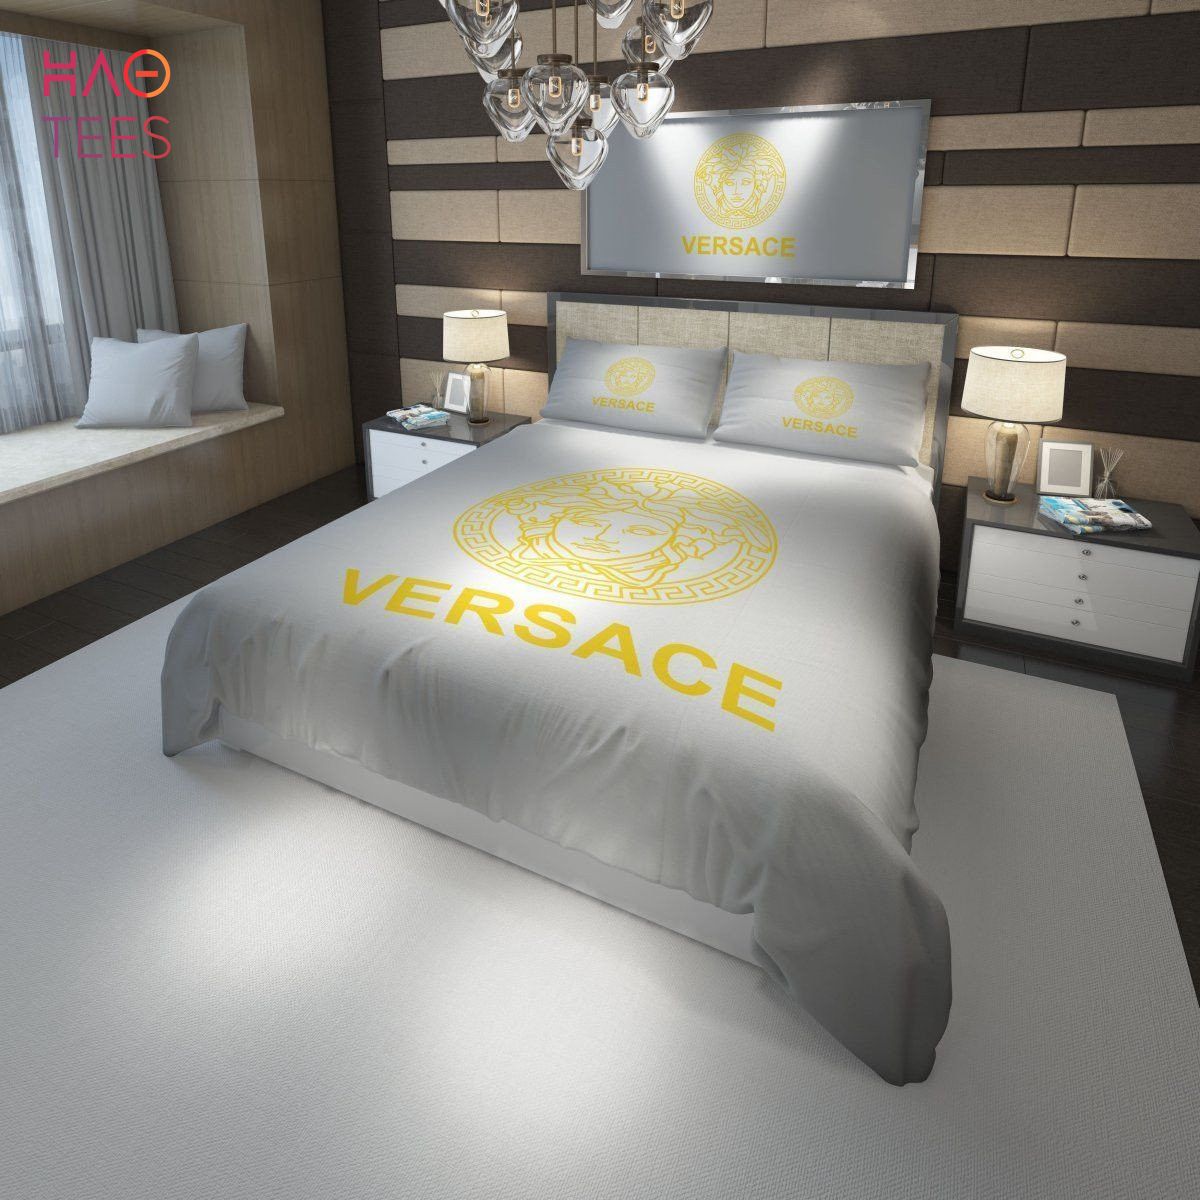 [THE BEST] Versace Luxury Brand Bedding Sets POD Design